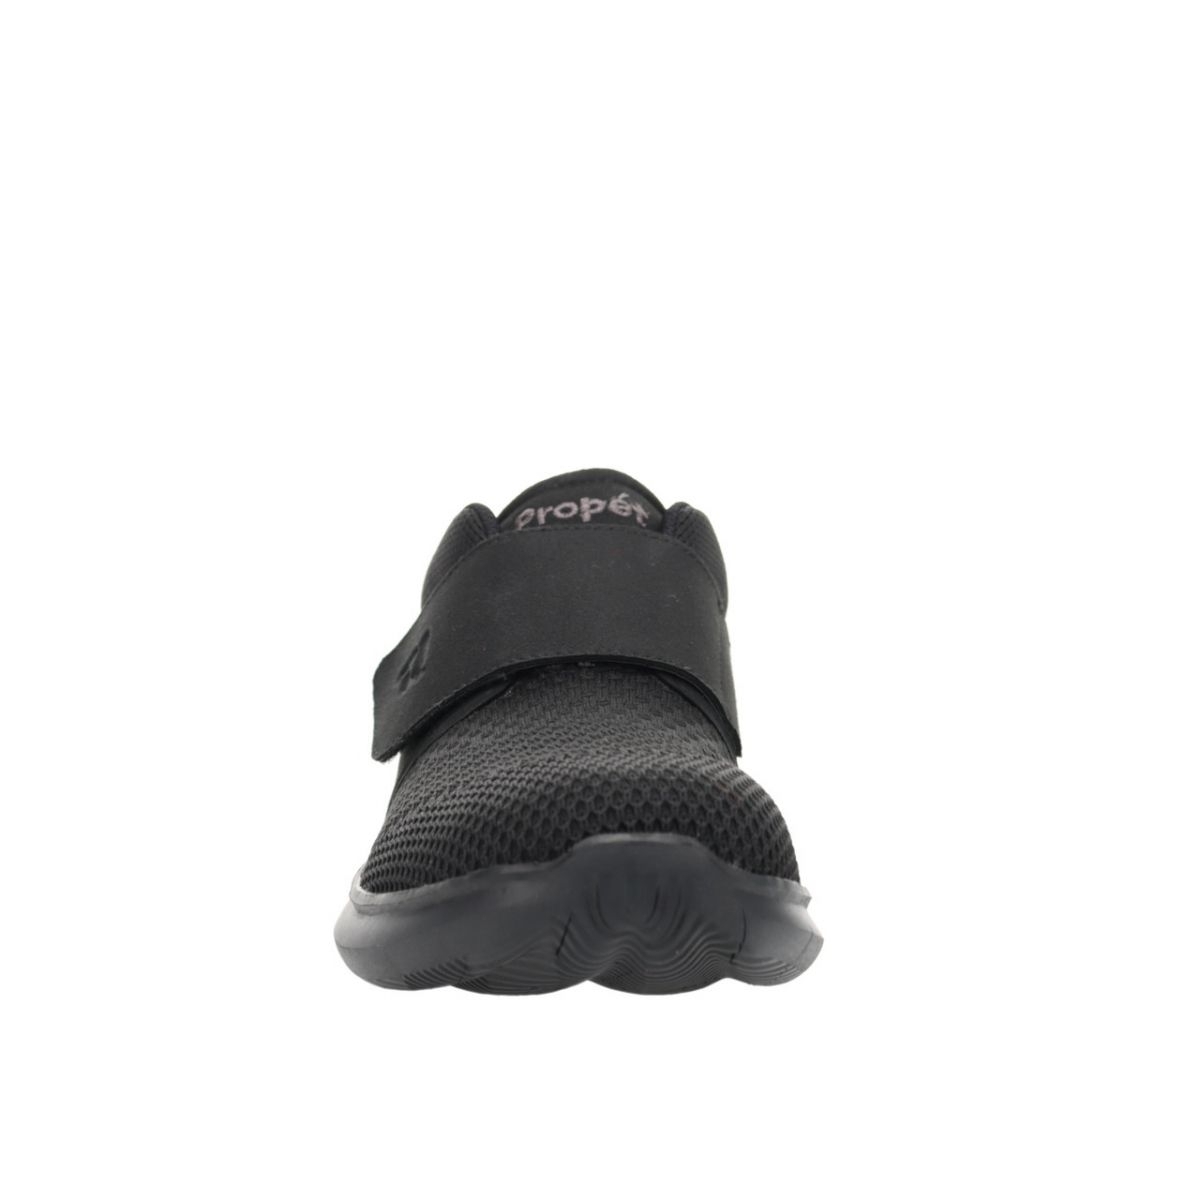 Propet Men's Viator Strap Walking Shoe All Black - MAA073MABL ALL BLACK - ALL BLACK, 8.5